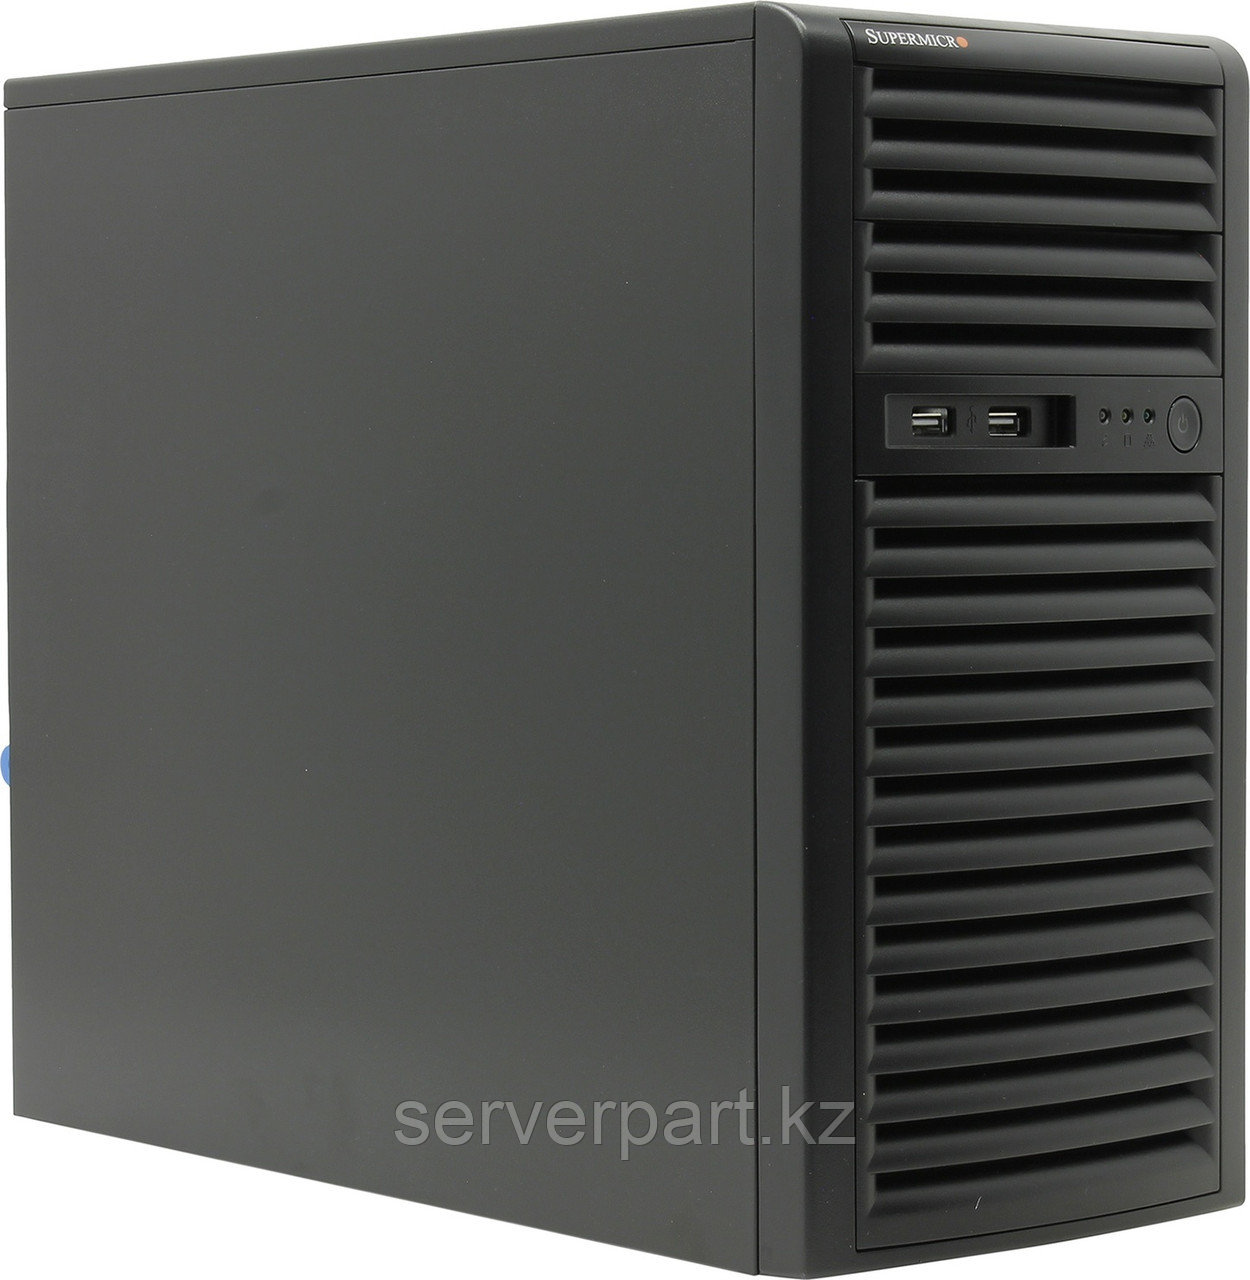 Сервер Supermicro SYS-5039D Tower 4LFF/4-core intel Xeon E3-1220v6 3GHz/24GB EUDIMM/2x240GB SSD RI Hyb